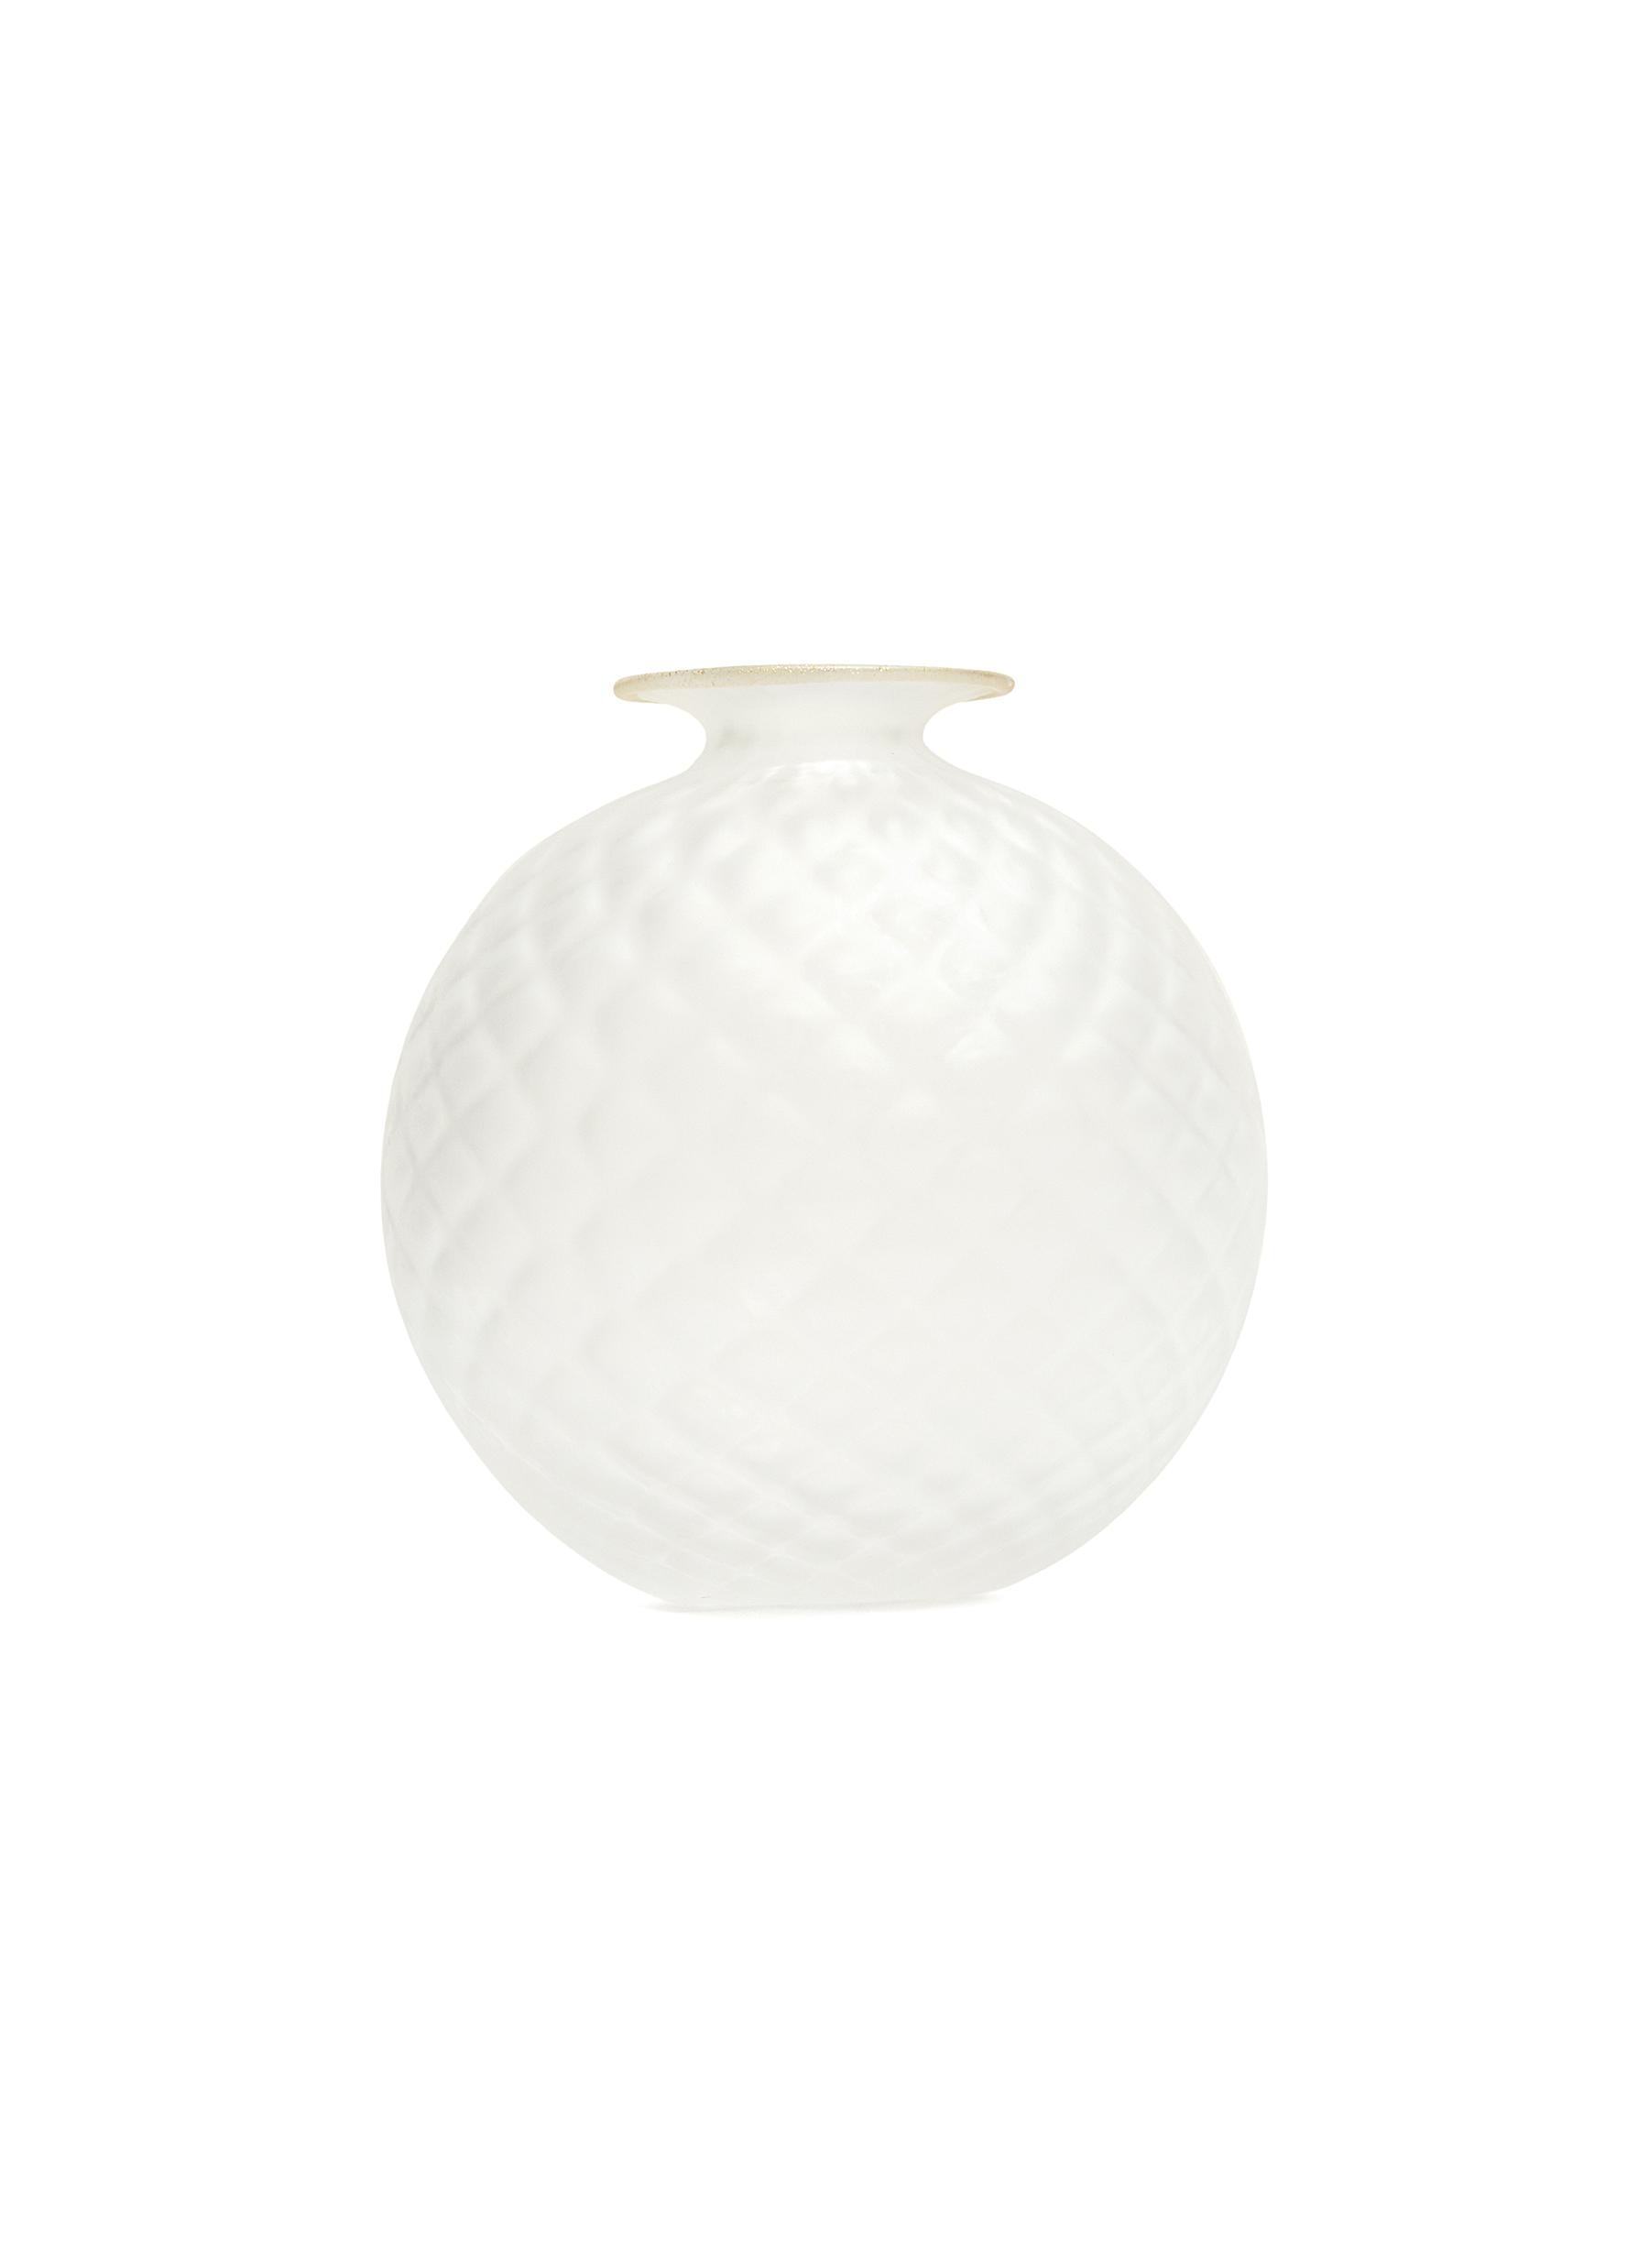 Monofiore Balloton Frozen Vase 100.18 Vase - Crystal Gold Leaf